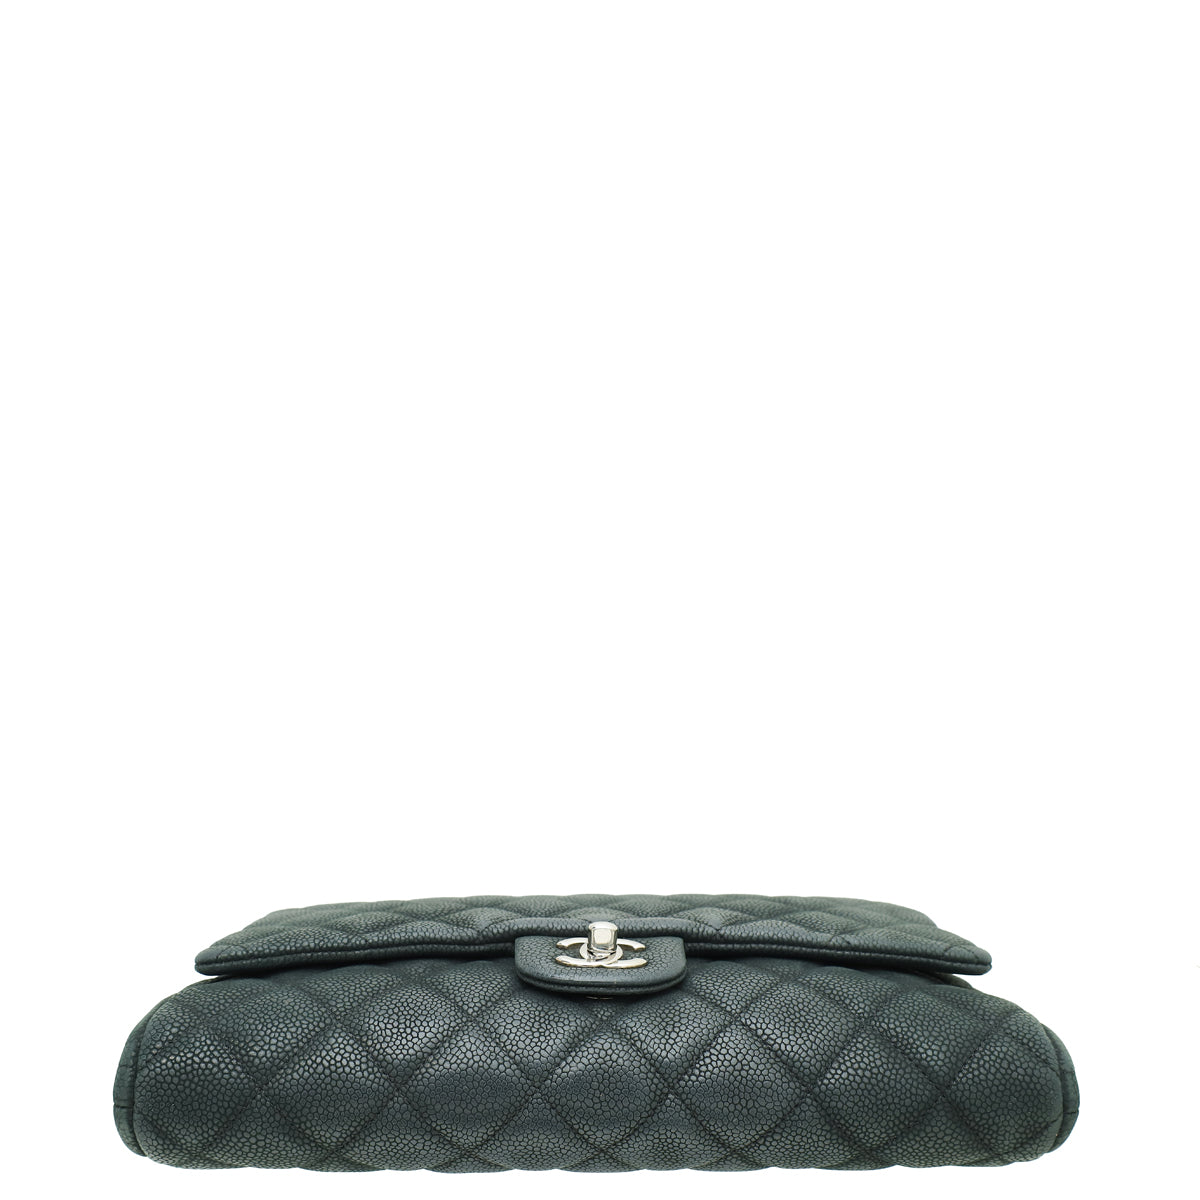 Chanel Black Classic Clutch Bag